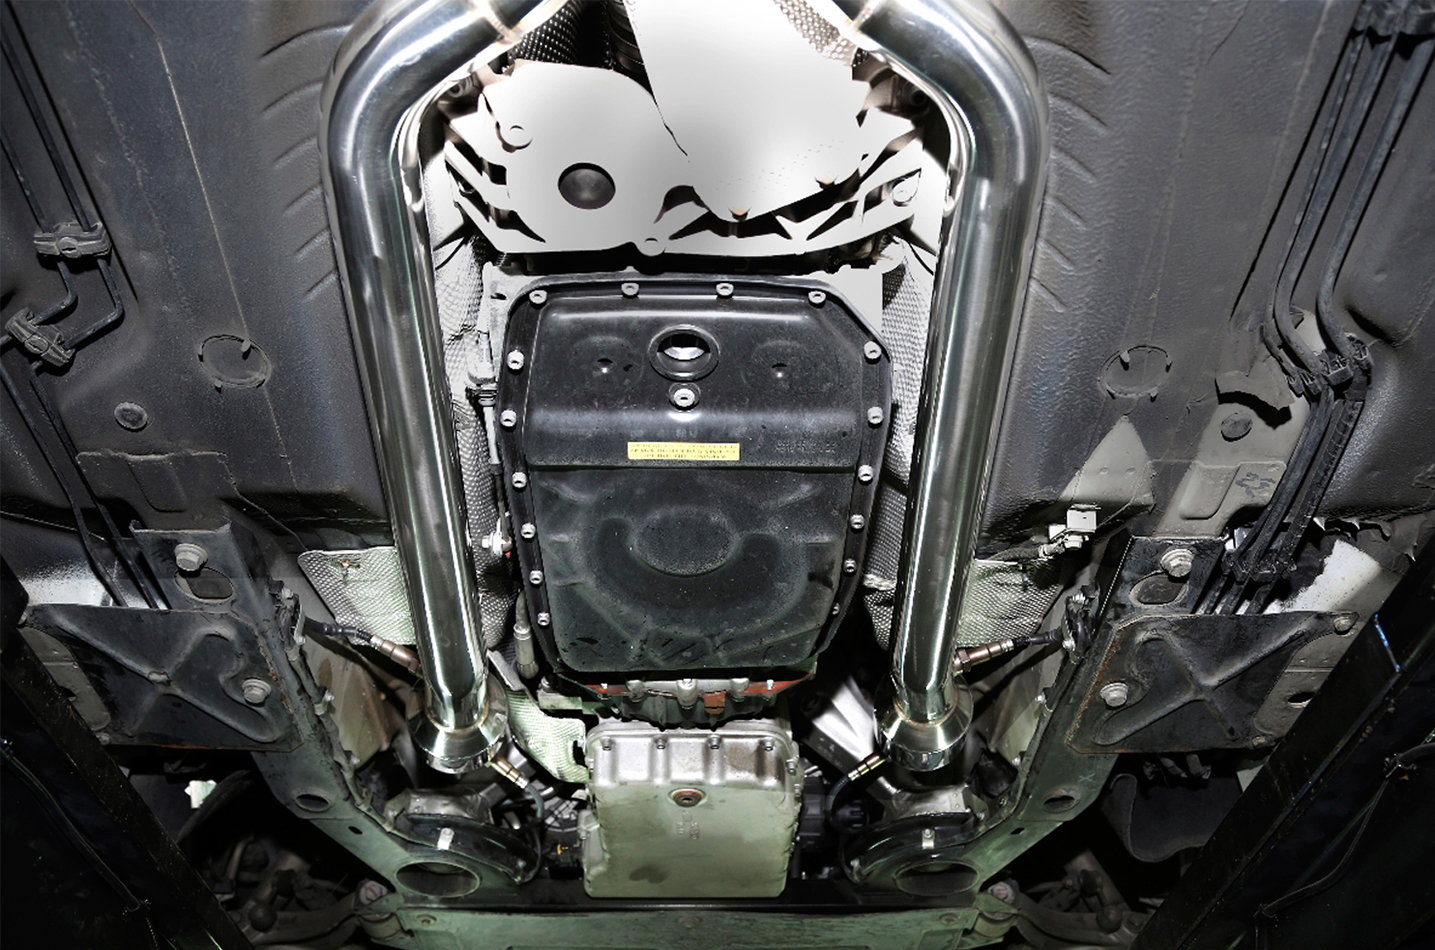 IPE exhaust system for Maserati Gran Turismo